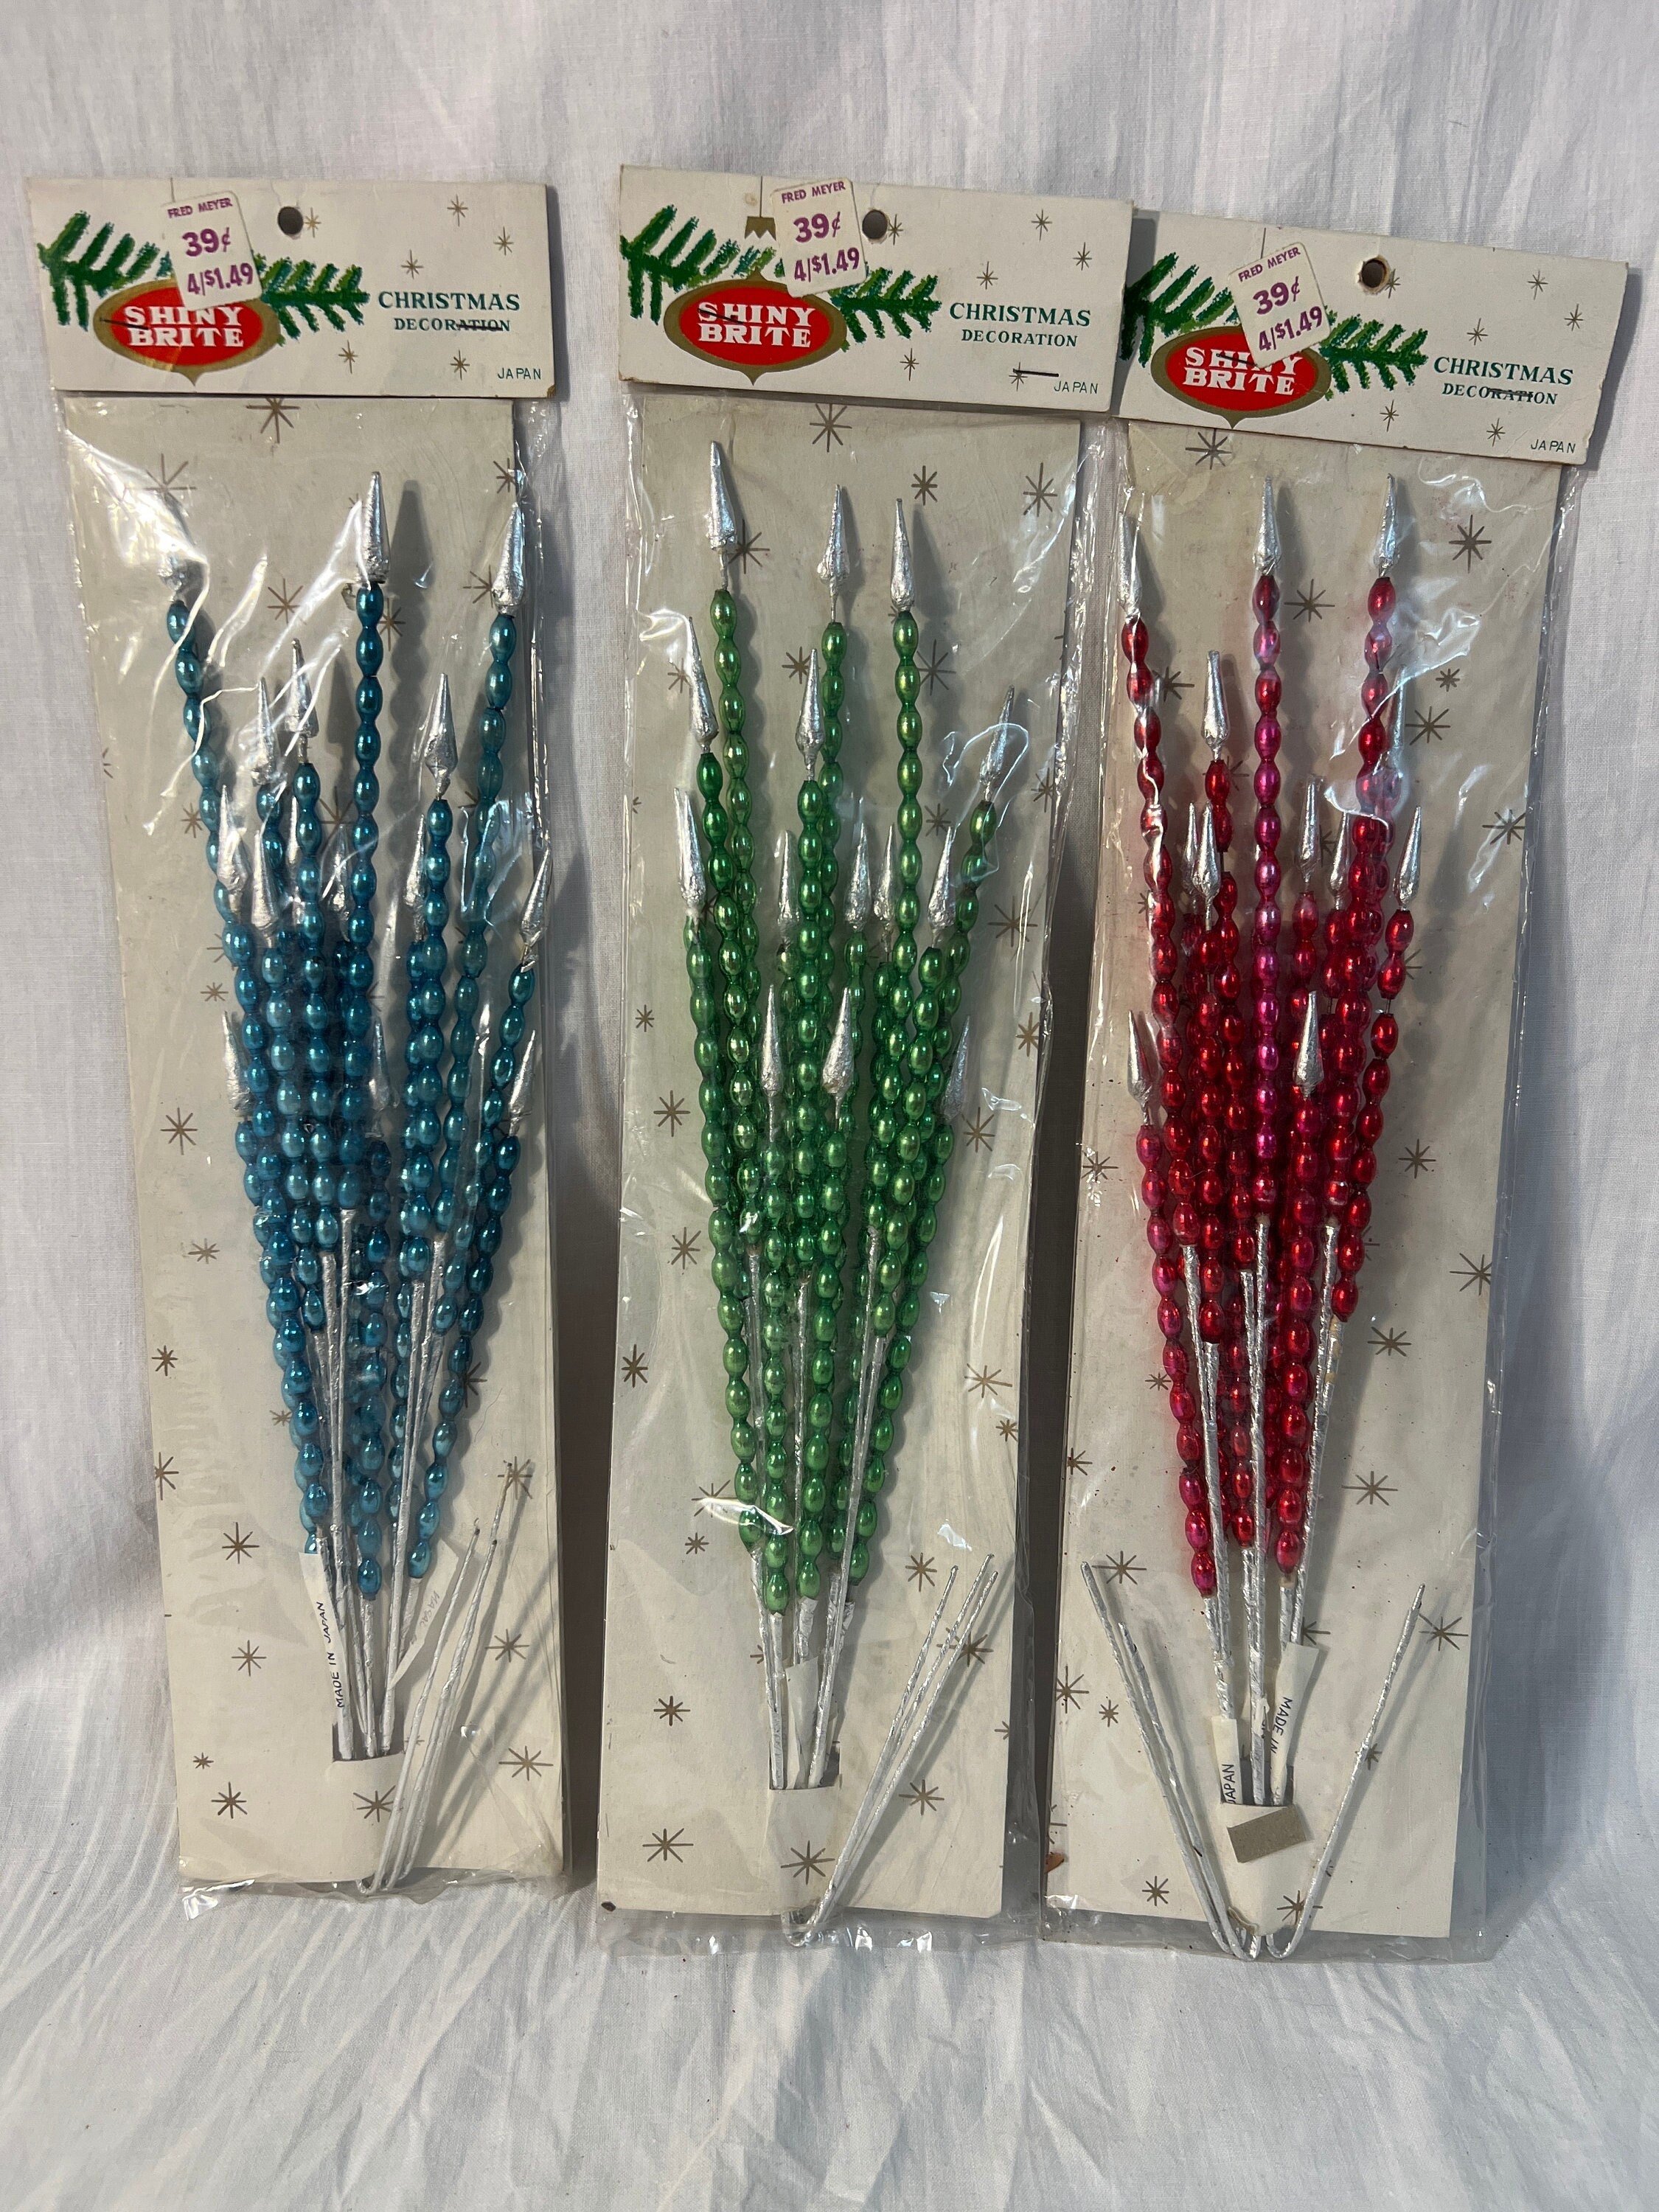 1950s vintage mercury glass bead Christmas decorations, beaded spray  holiday floral picks